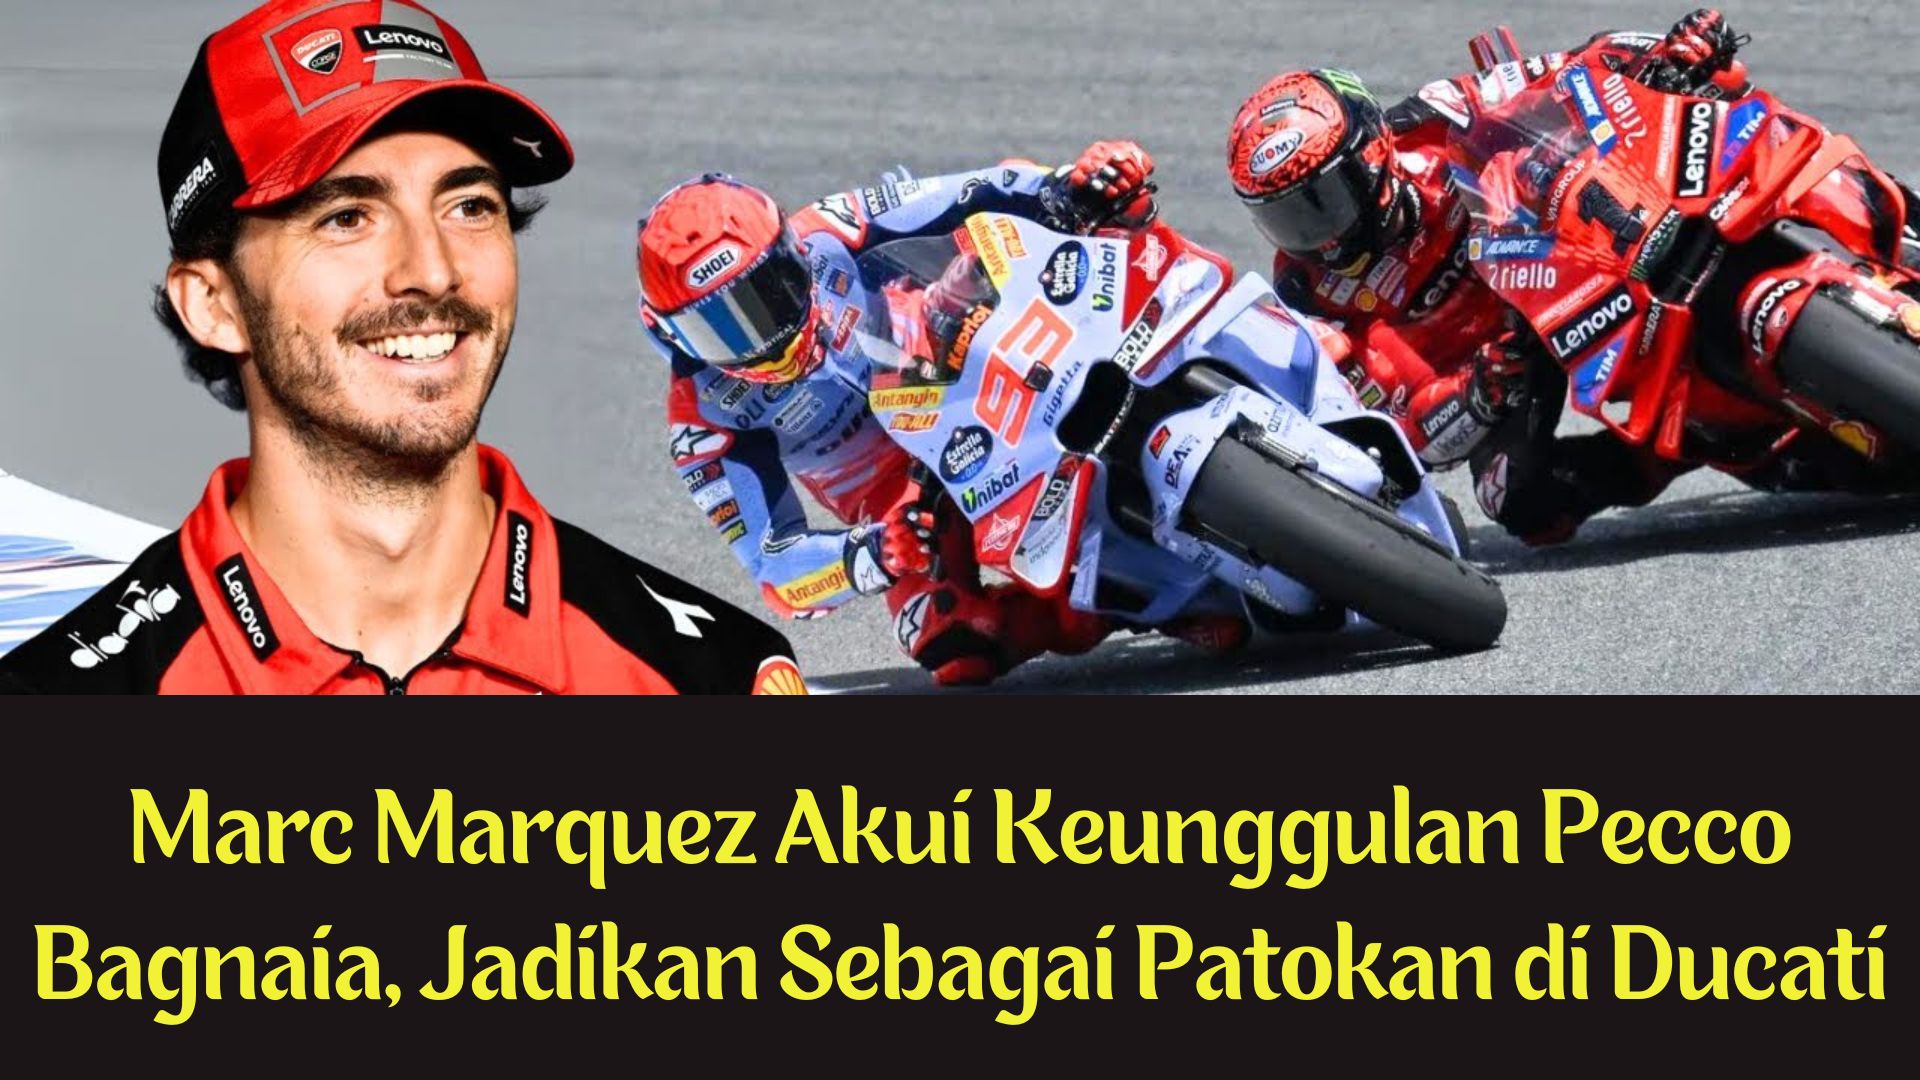 Marc Marquez Akui Keunggulan Pecco Bagnaia, Jadikan Sebagai Patokan di Ducati